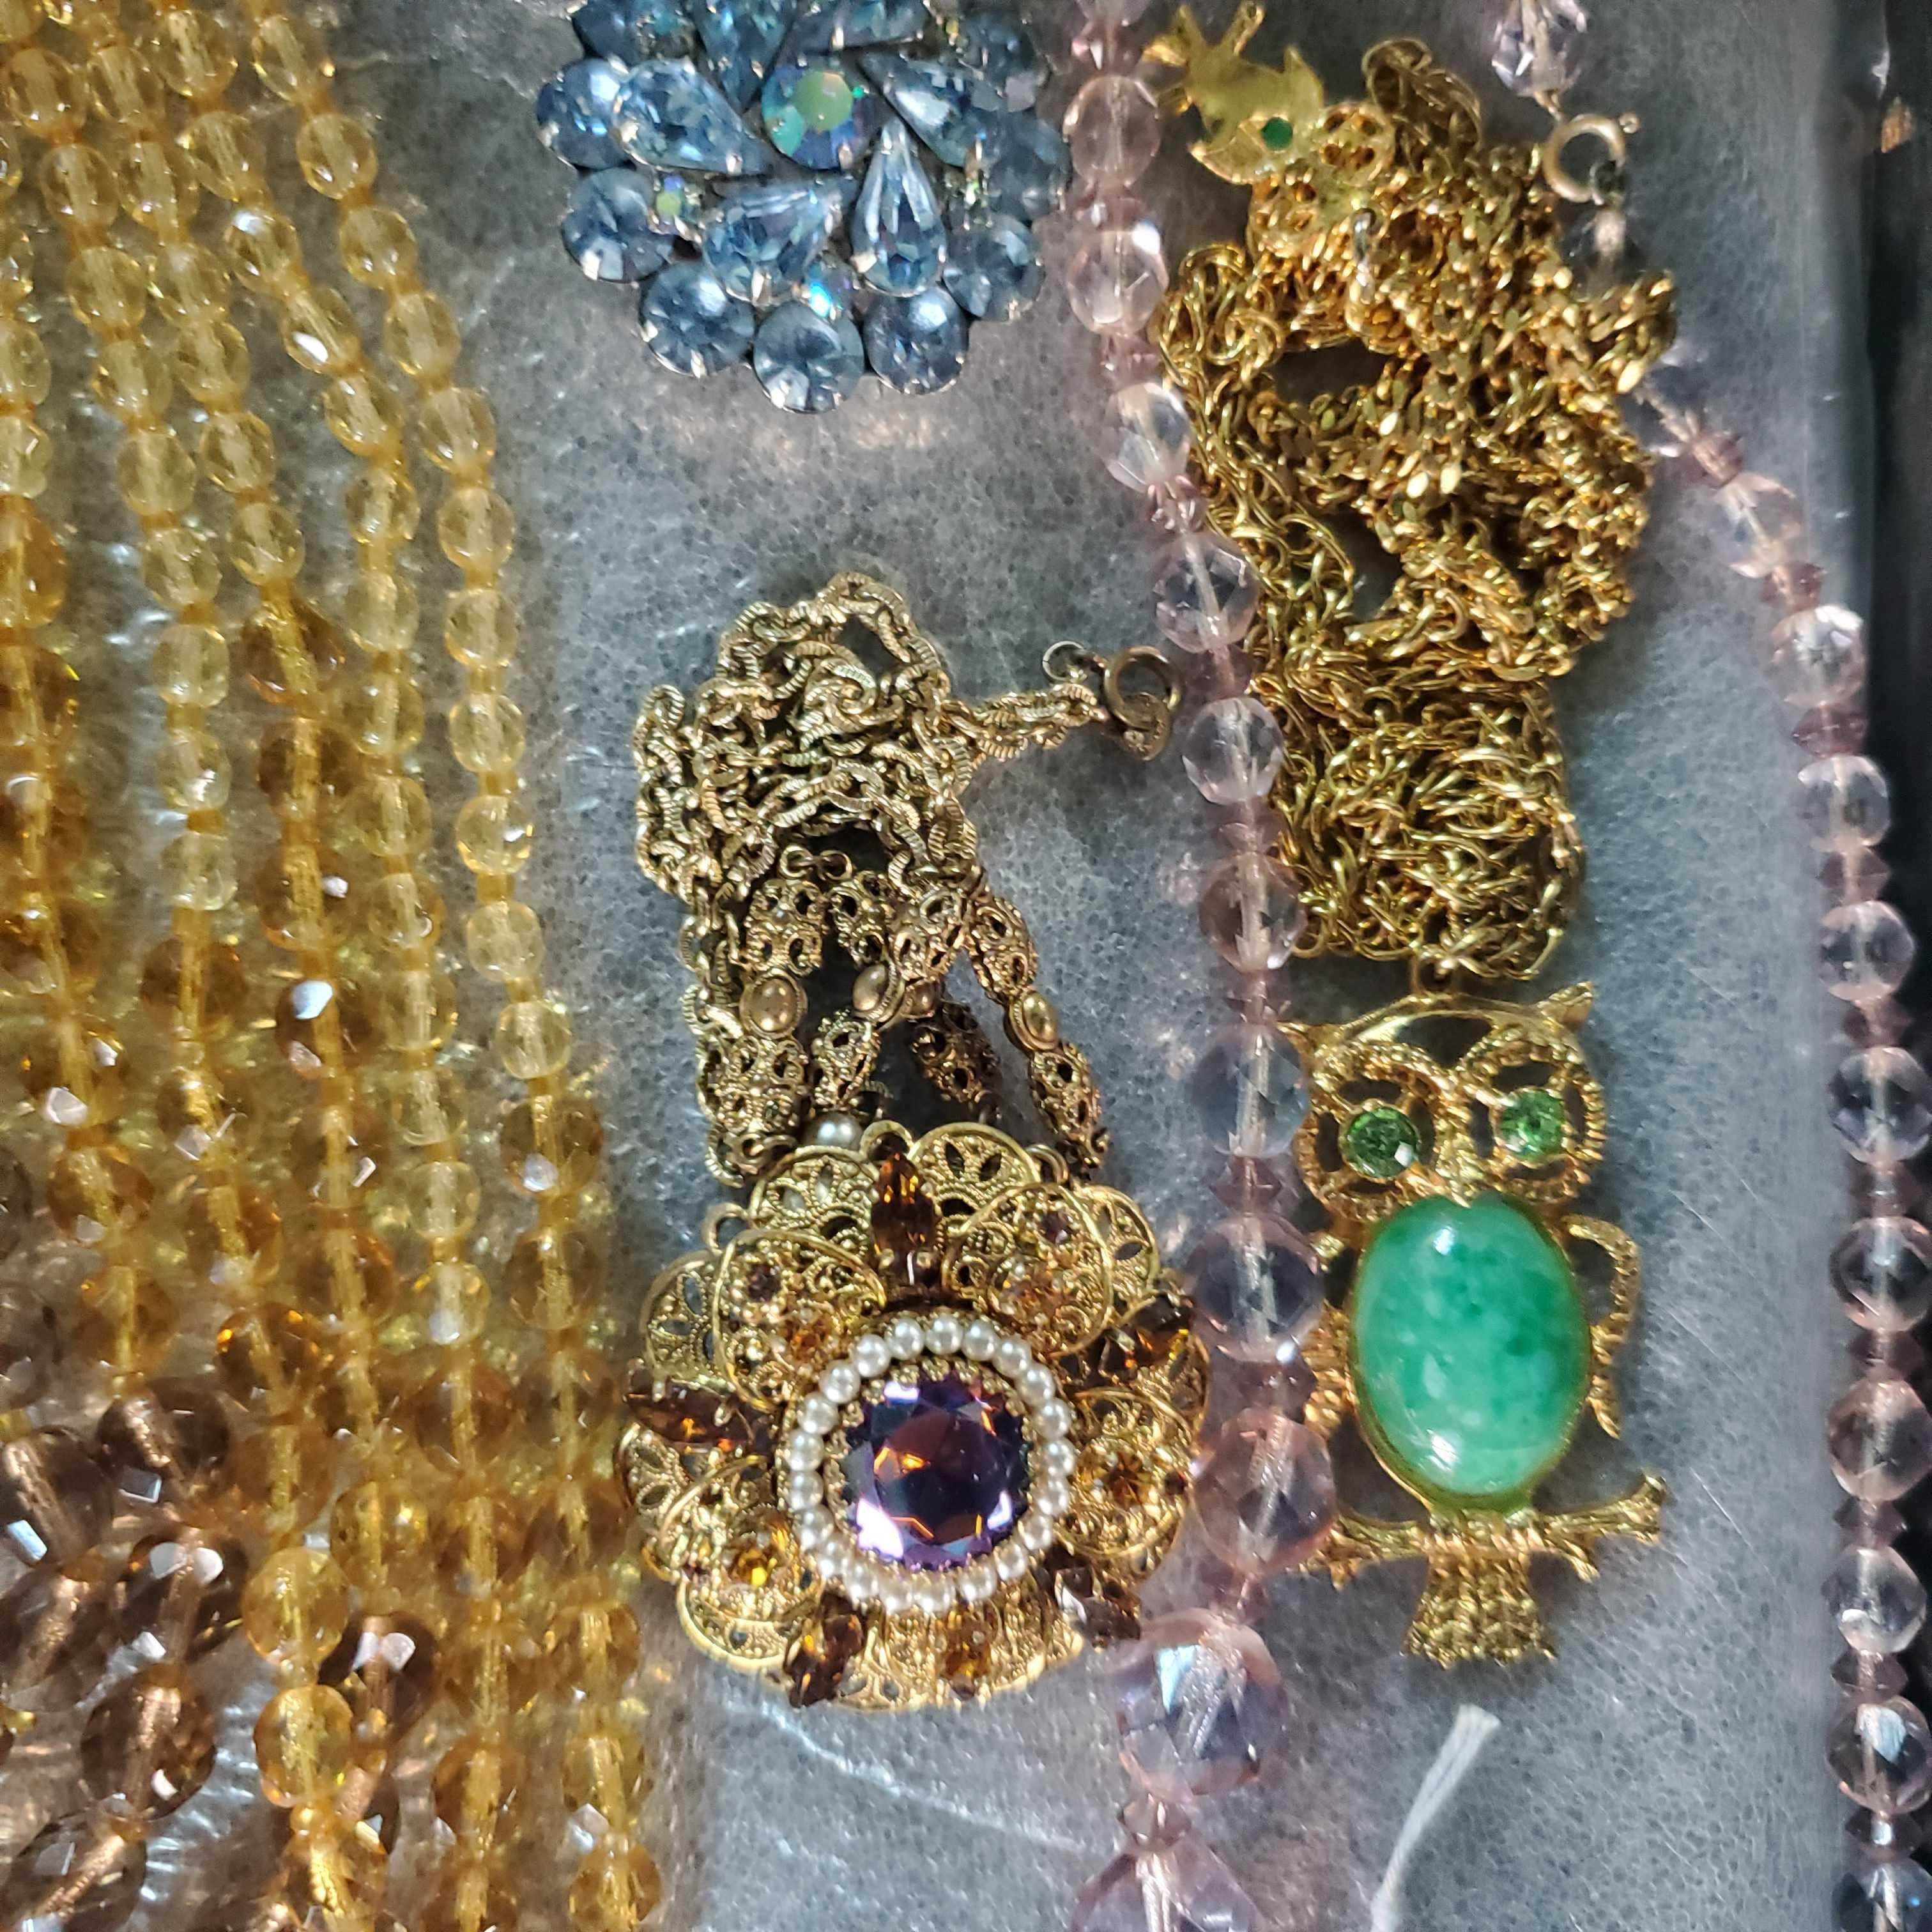 Case Lot Of Costume Jewelry